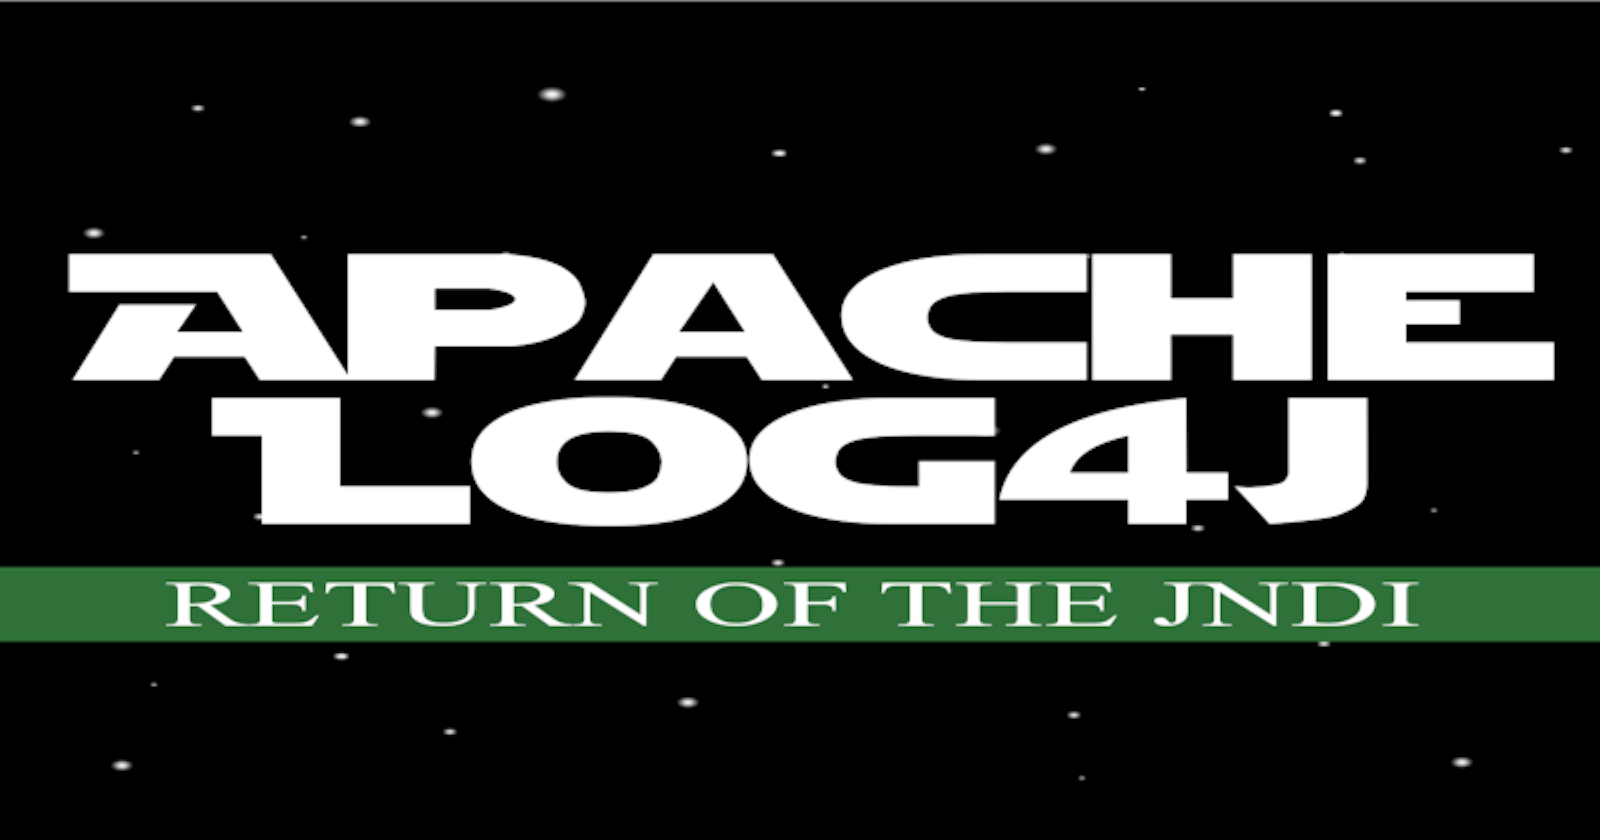 Apache Log4j: Return of the JNDI